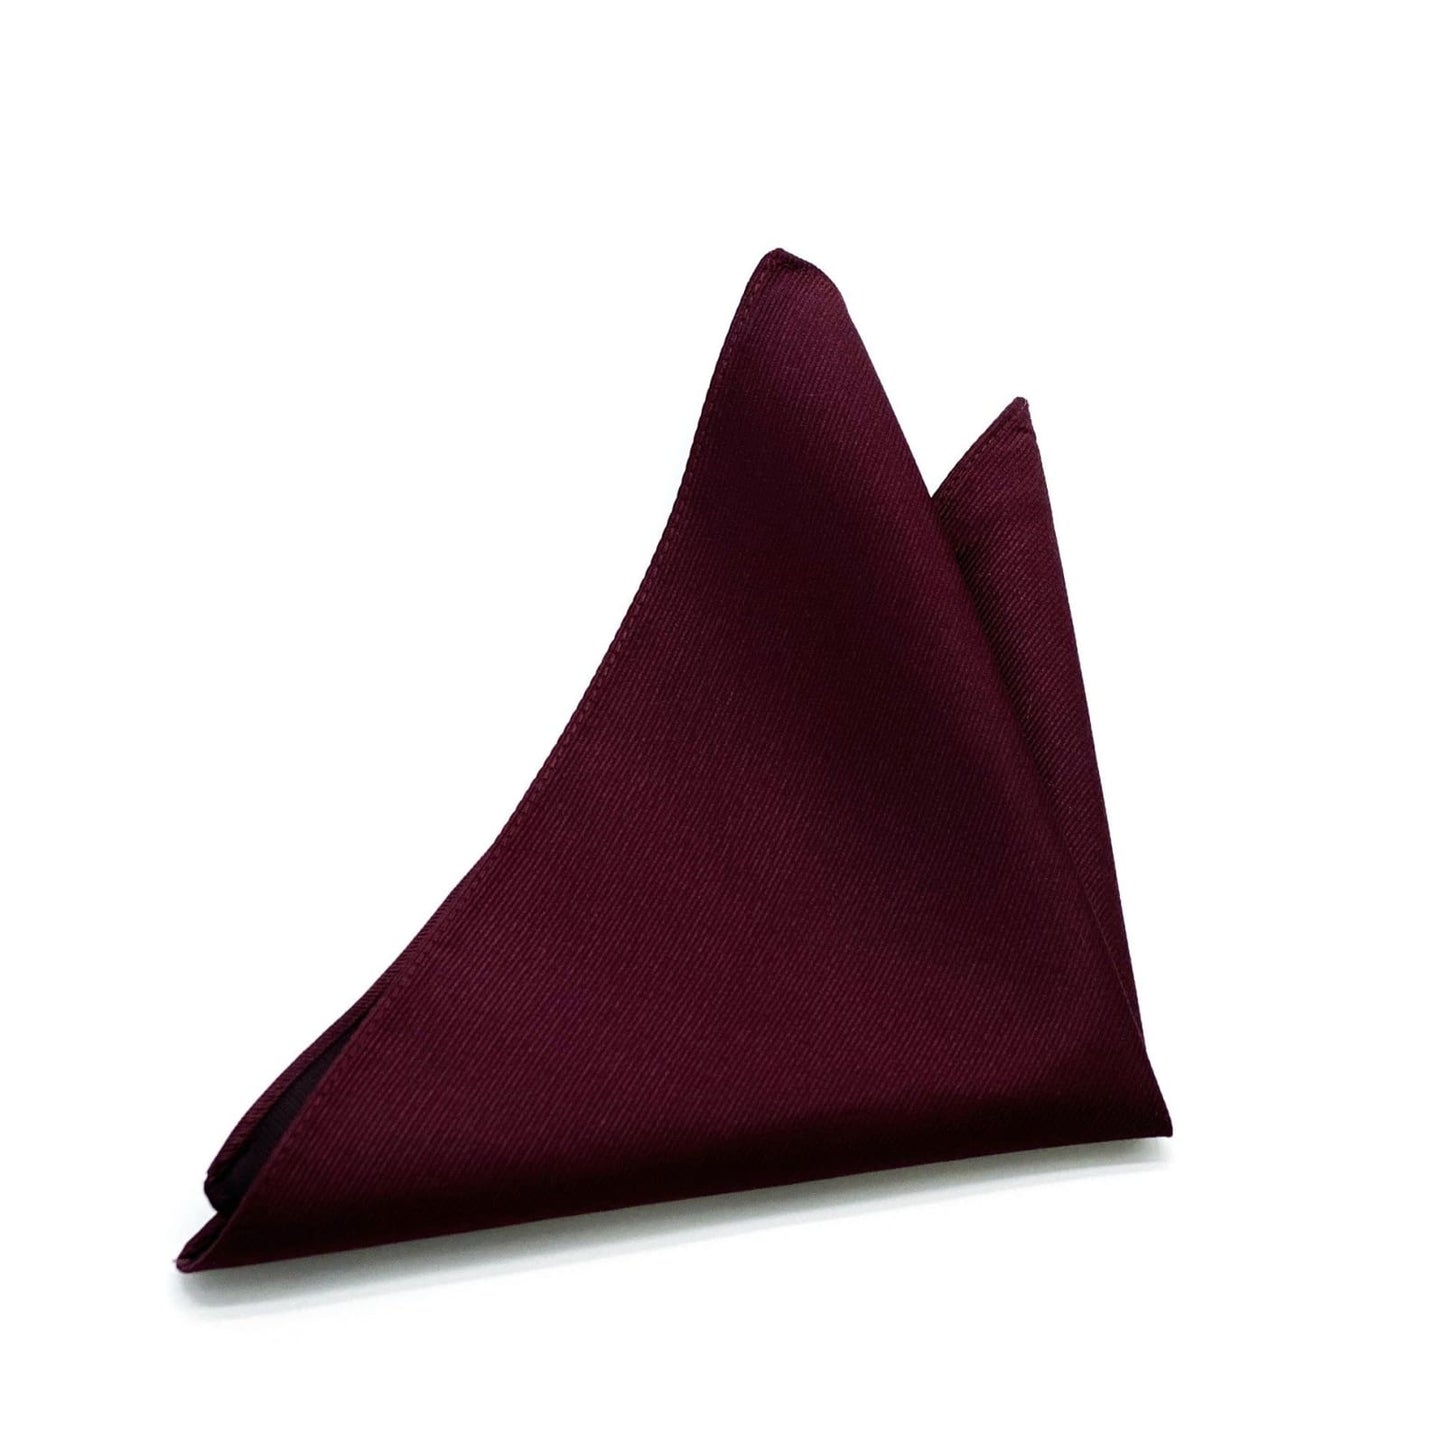 BERLIN BOW handkerchief - 2084 burgundy red - accessories